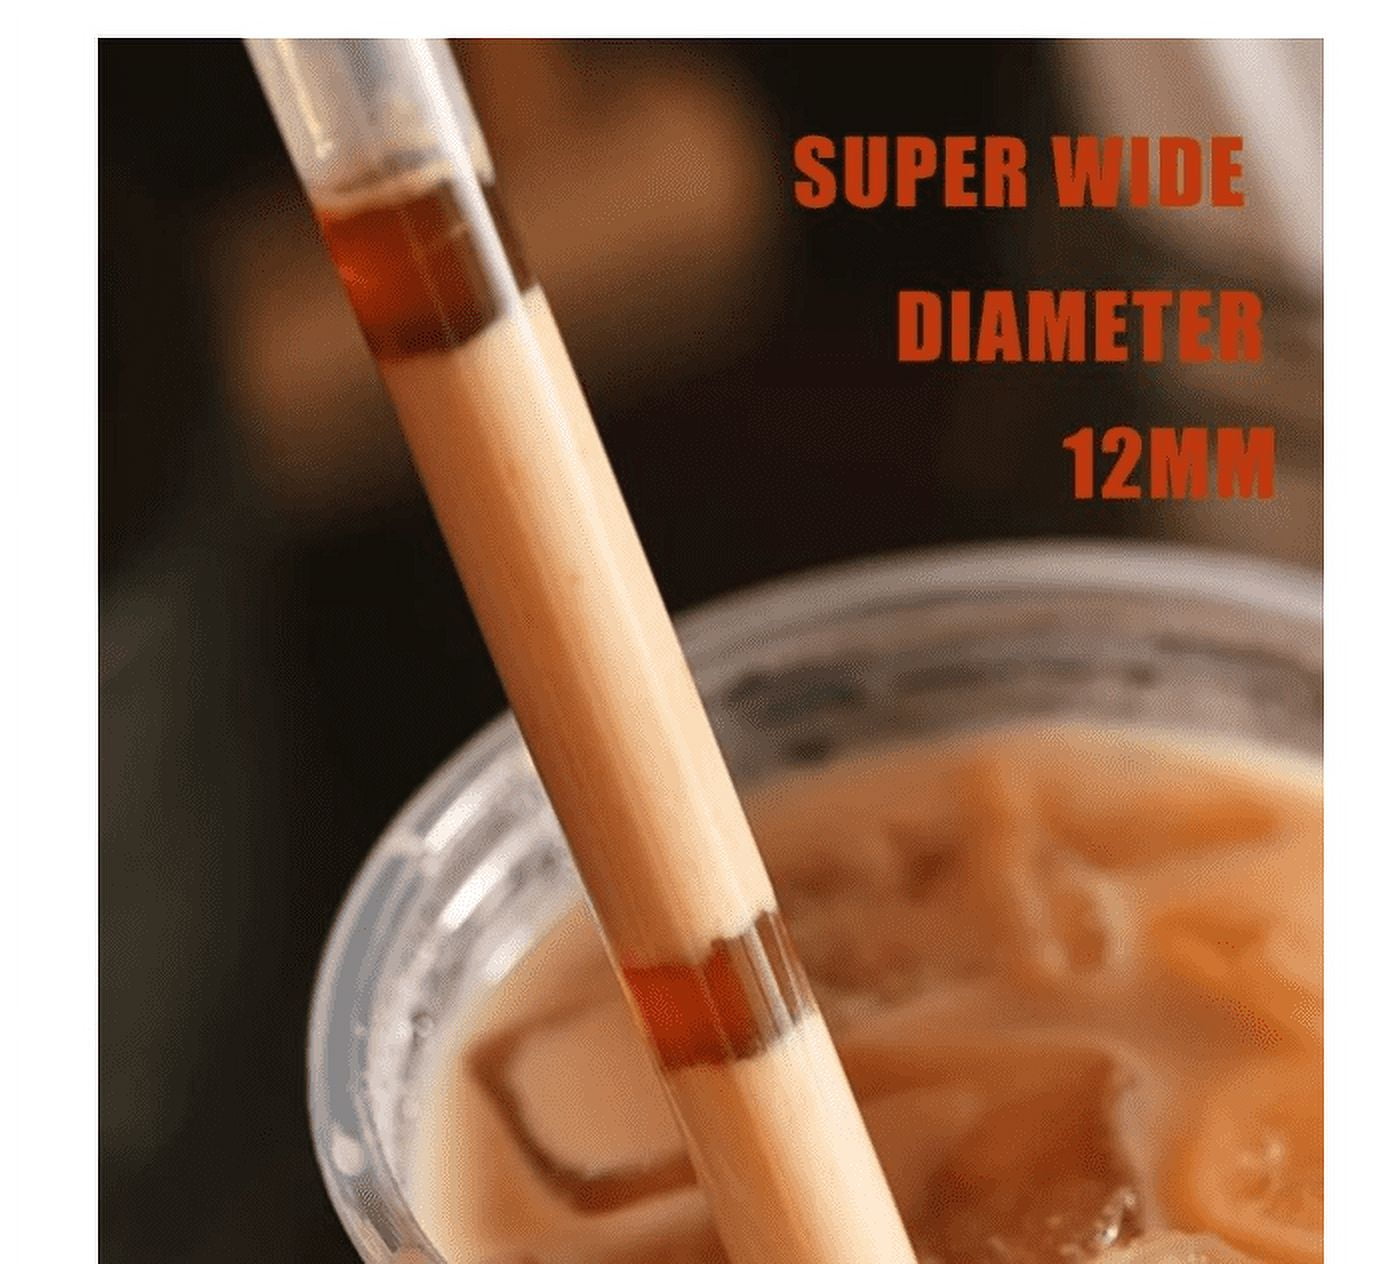 KoberrLi Straws Disposable Boba Jumbo Smoothie Milkshake 100Pcs Wide Straws  for Boba Tea Shake Drinking(9.45 Tall, 0.43 Diameter)